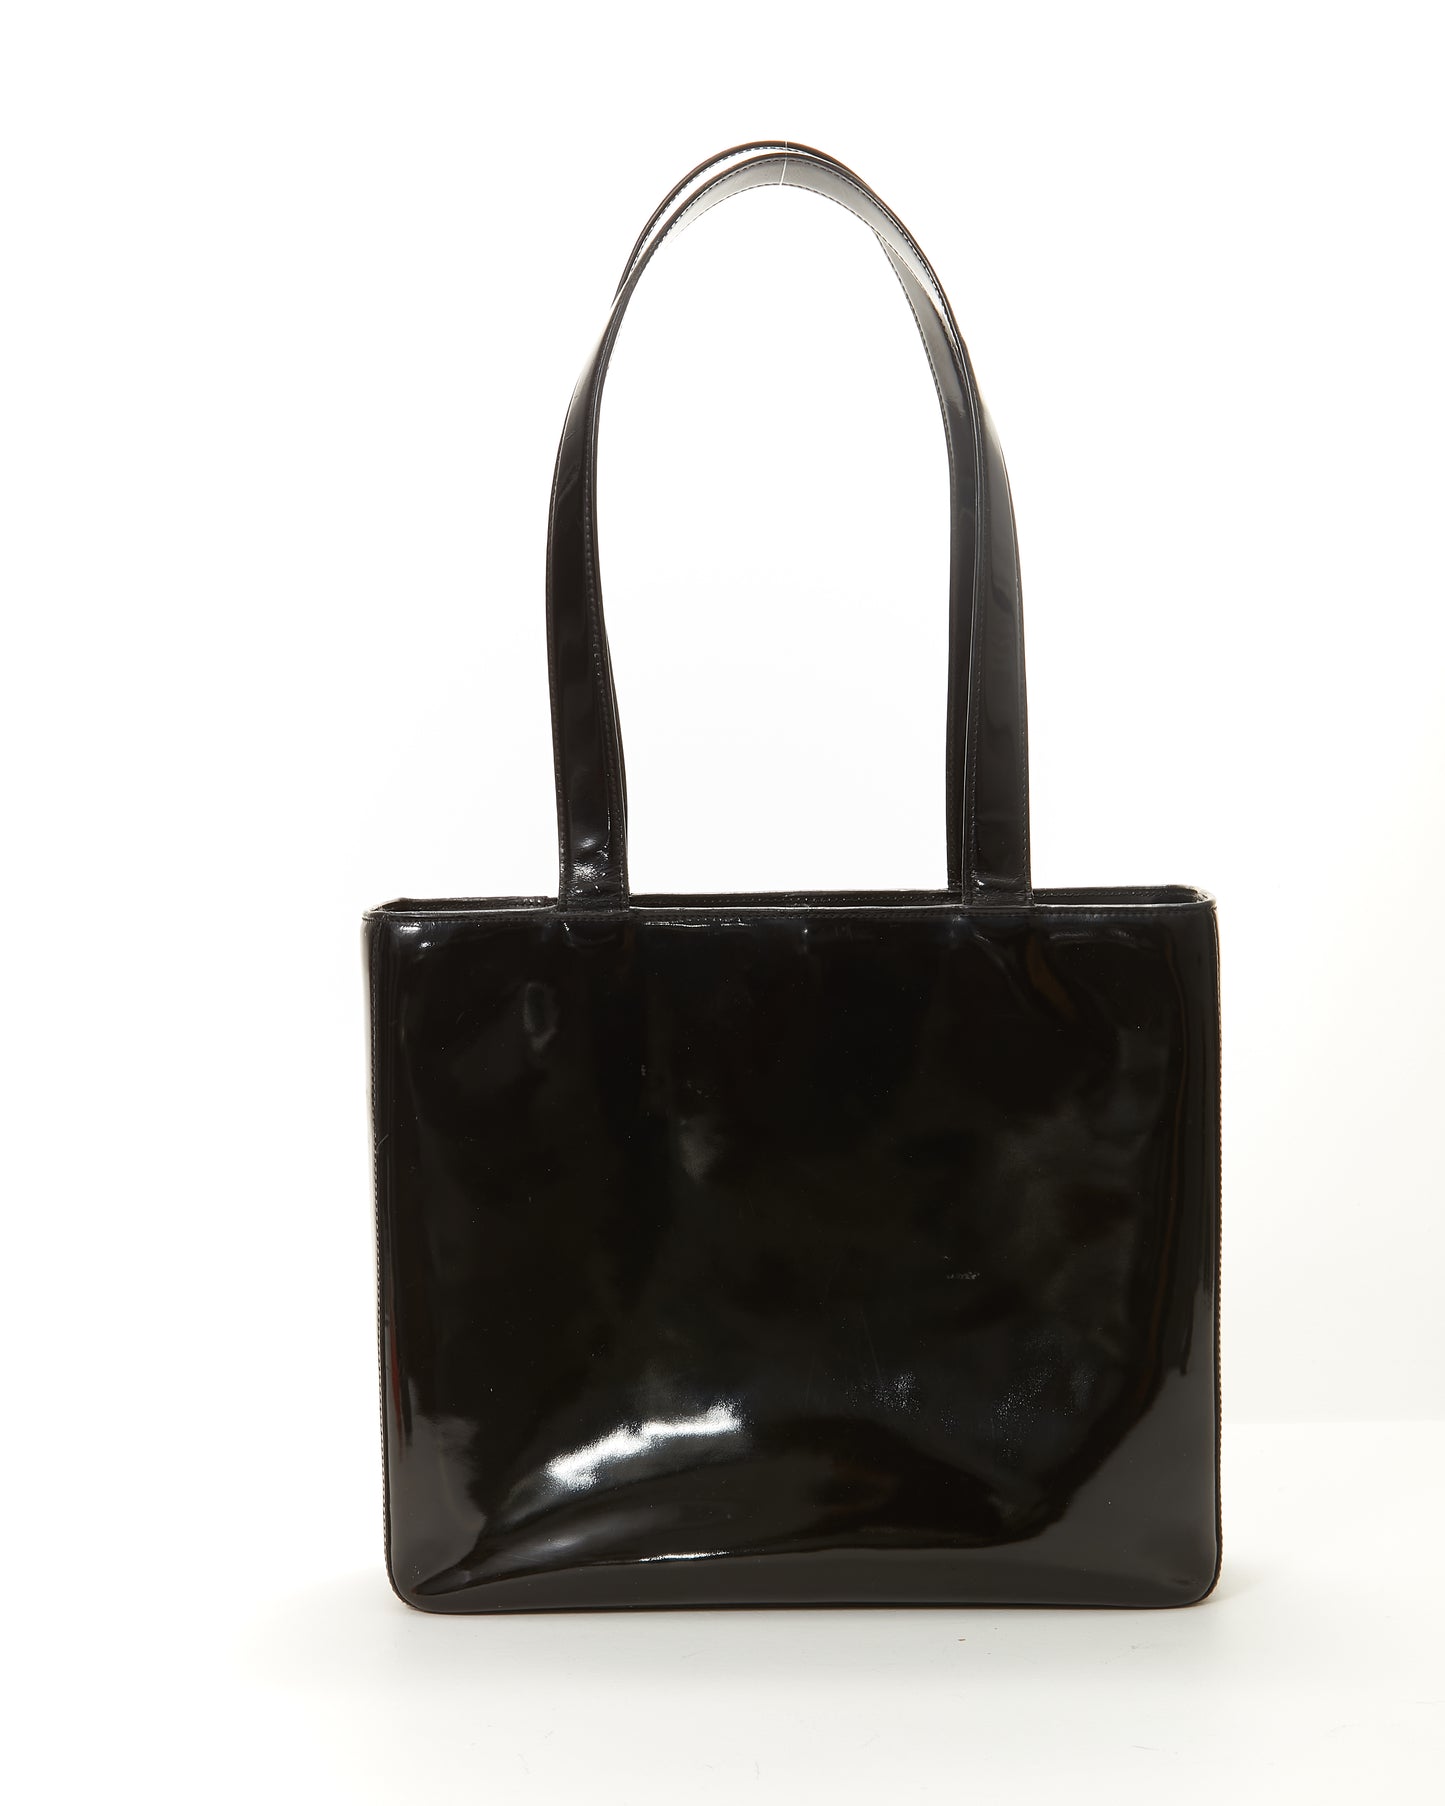 Chanel Black Patent Logo Small Square Shoulder Bag